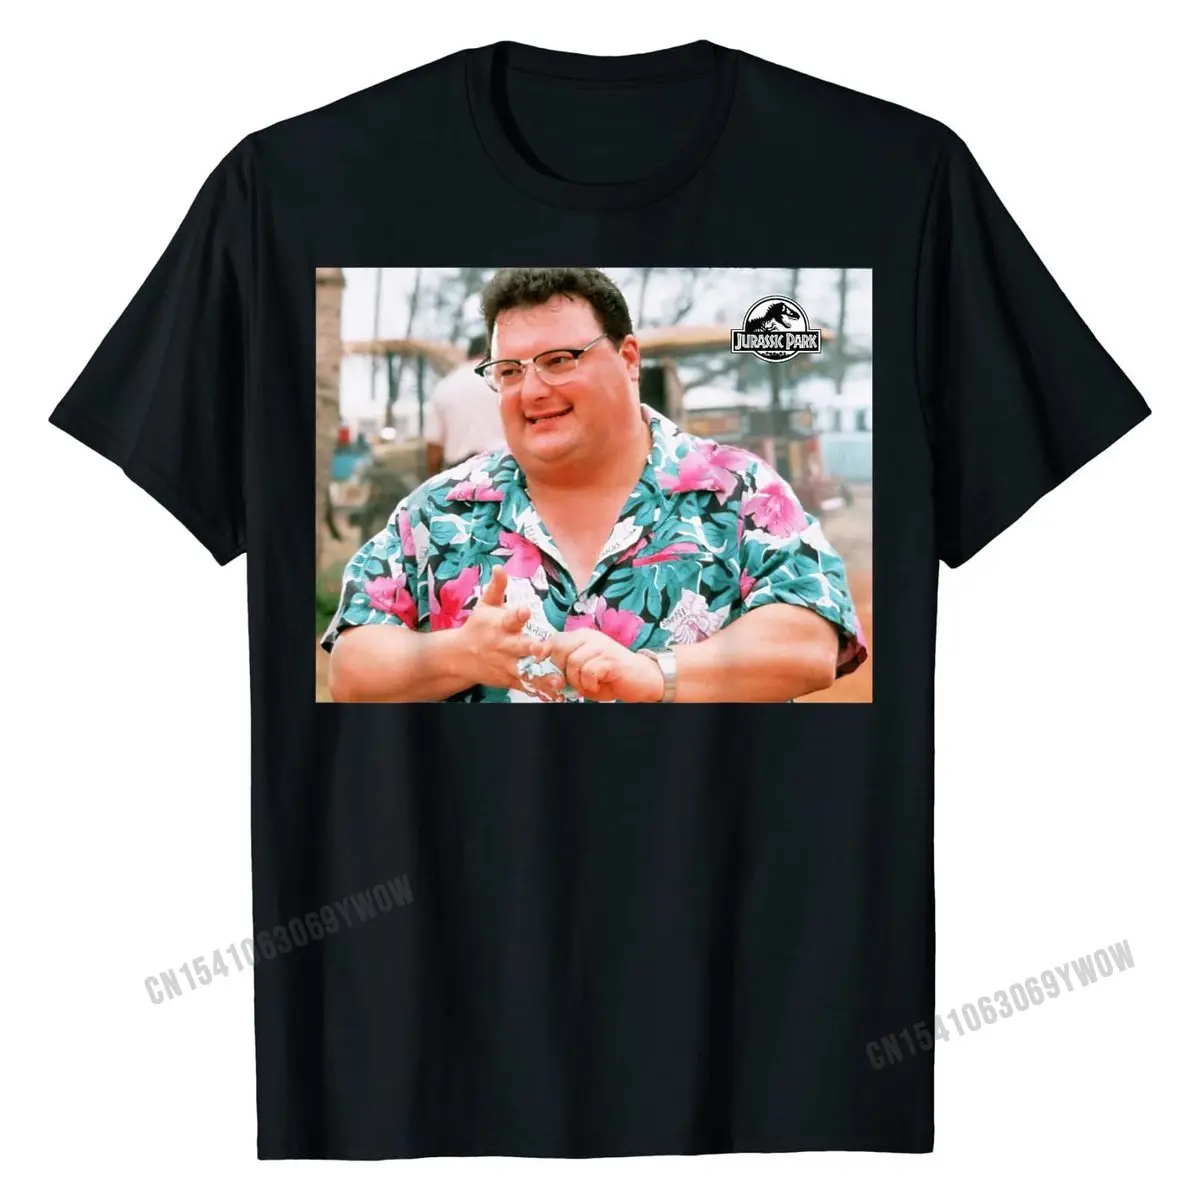 

Jurassic Park Dennis Nedry Photoreal Graphic T-Shirt Classic Summer T Shirt Graphic Cotton Men's Tshirts